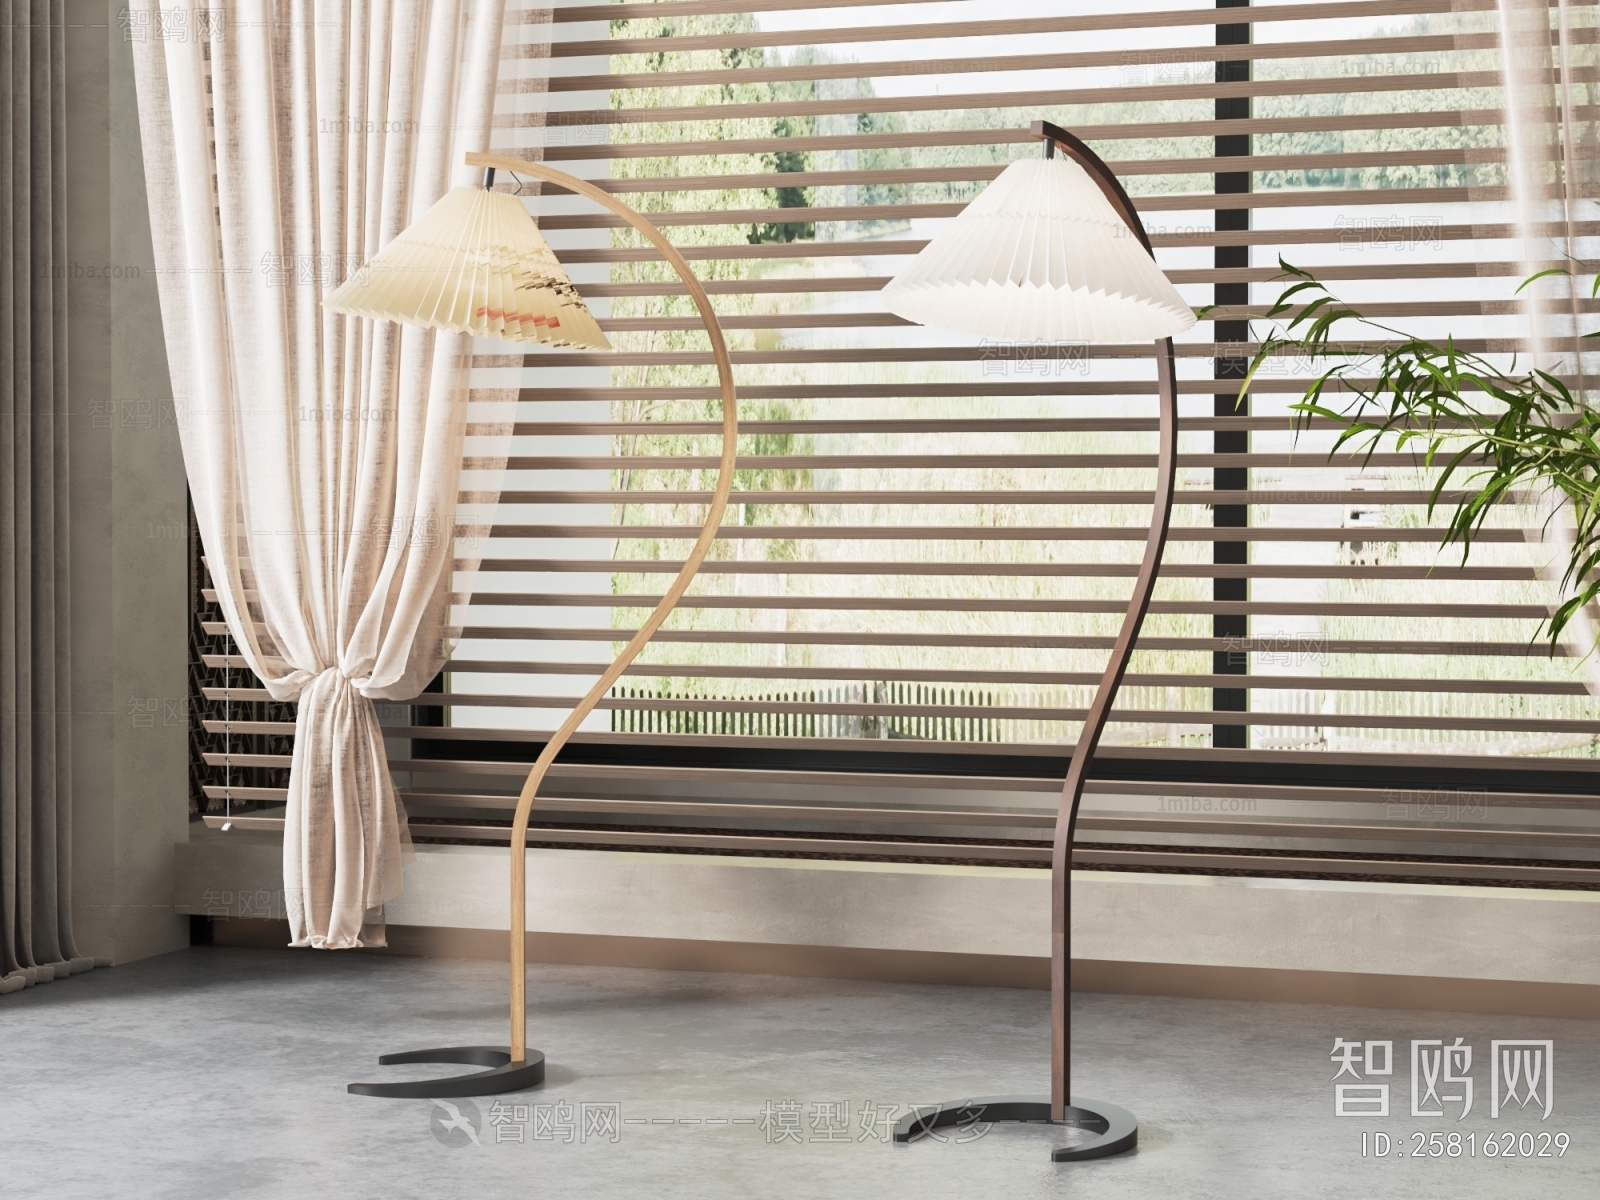 Simple European Style Floor Lamp